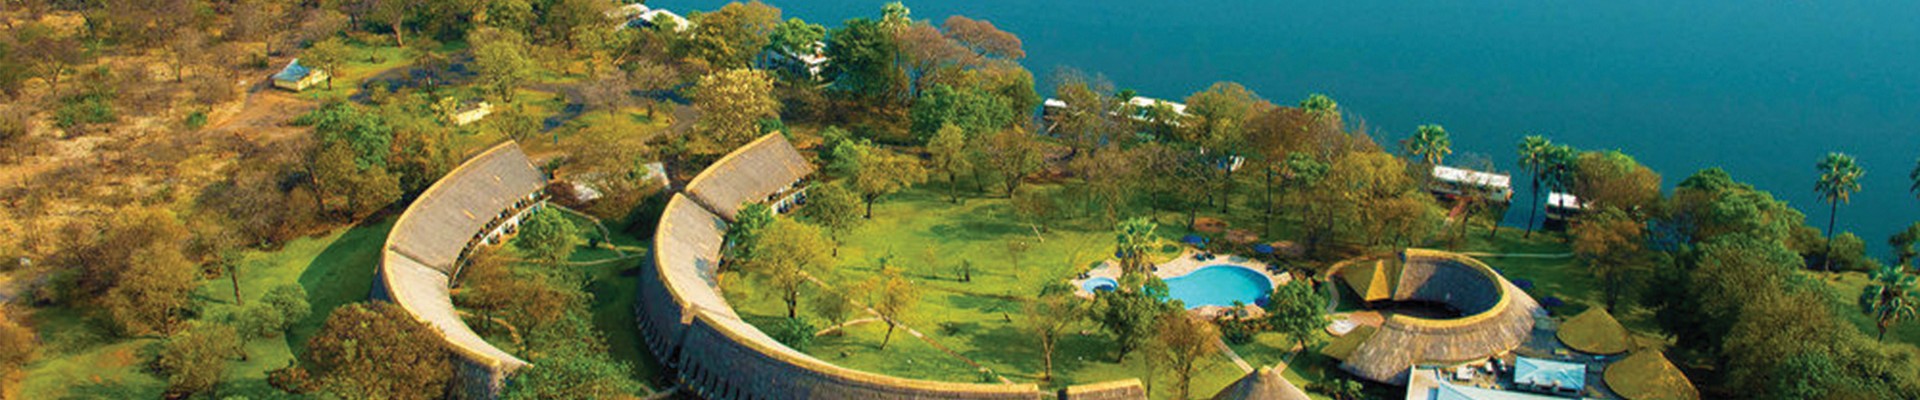 4* A'Zambezi River Lodge - Victoria Falls Package (3 Nights)